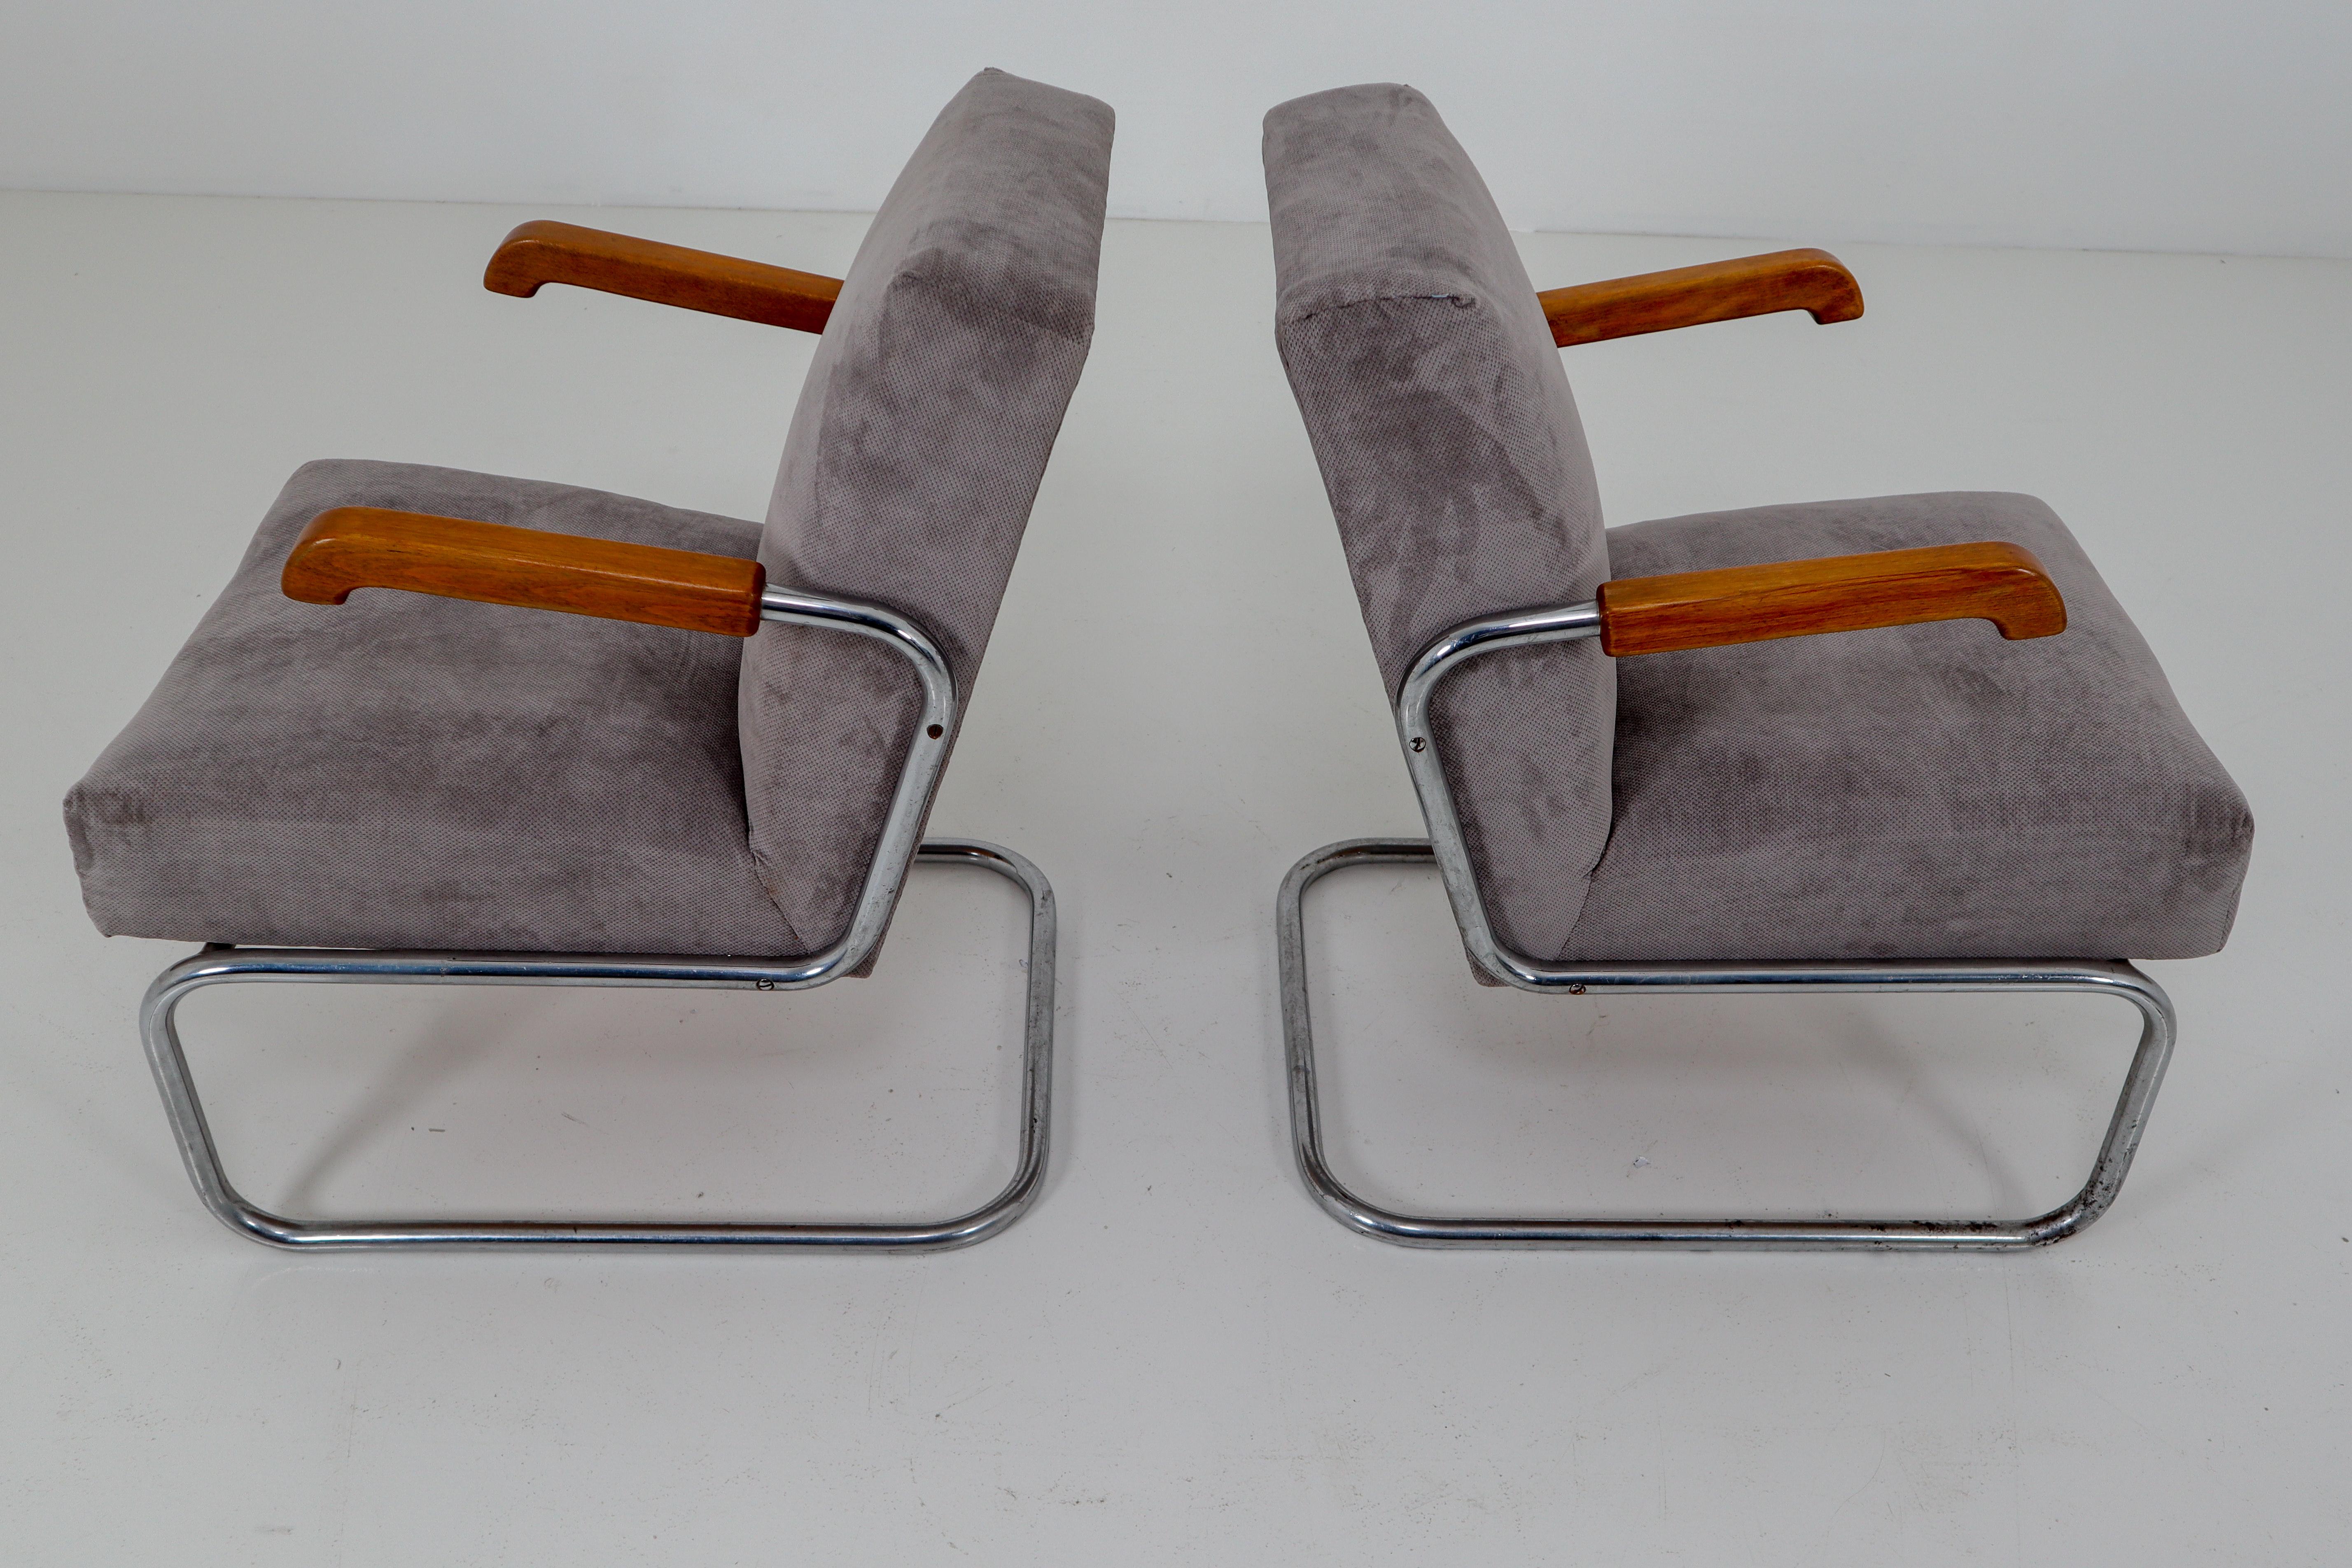 Steel Armchairs by Thonet, circa 1930s Midcentury Bauhaus Period